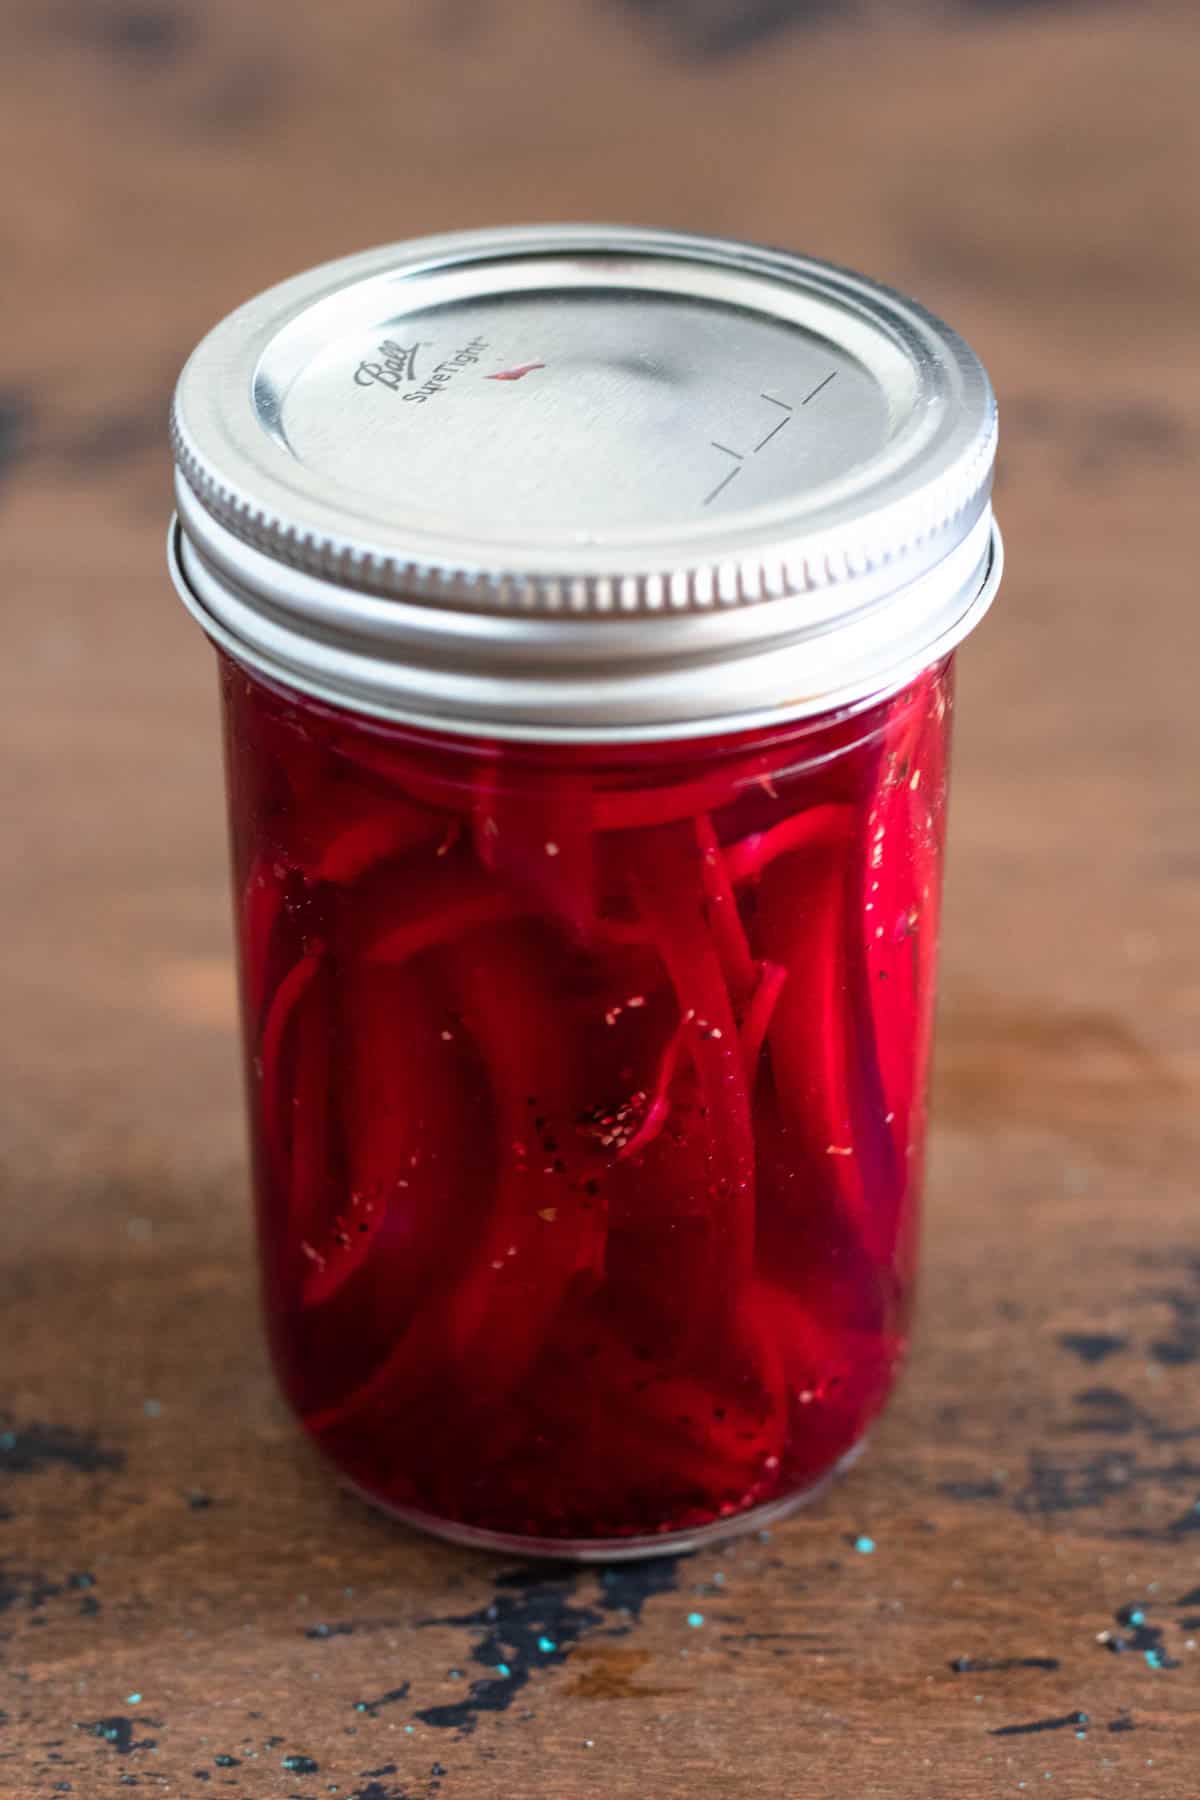 Glass jar of onions in pickling ingredients.